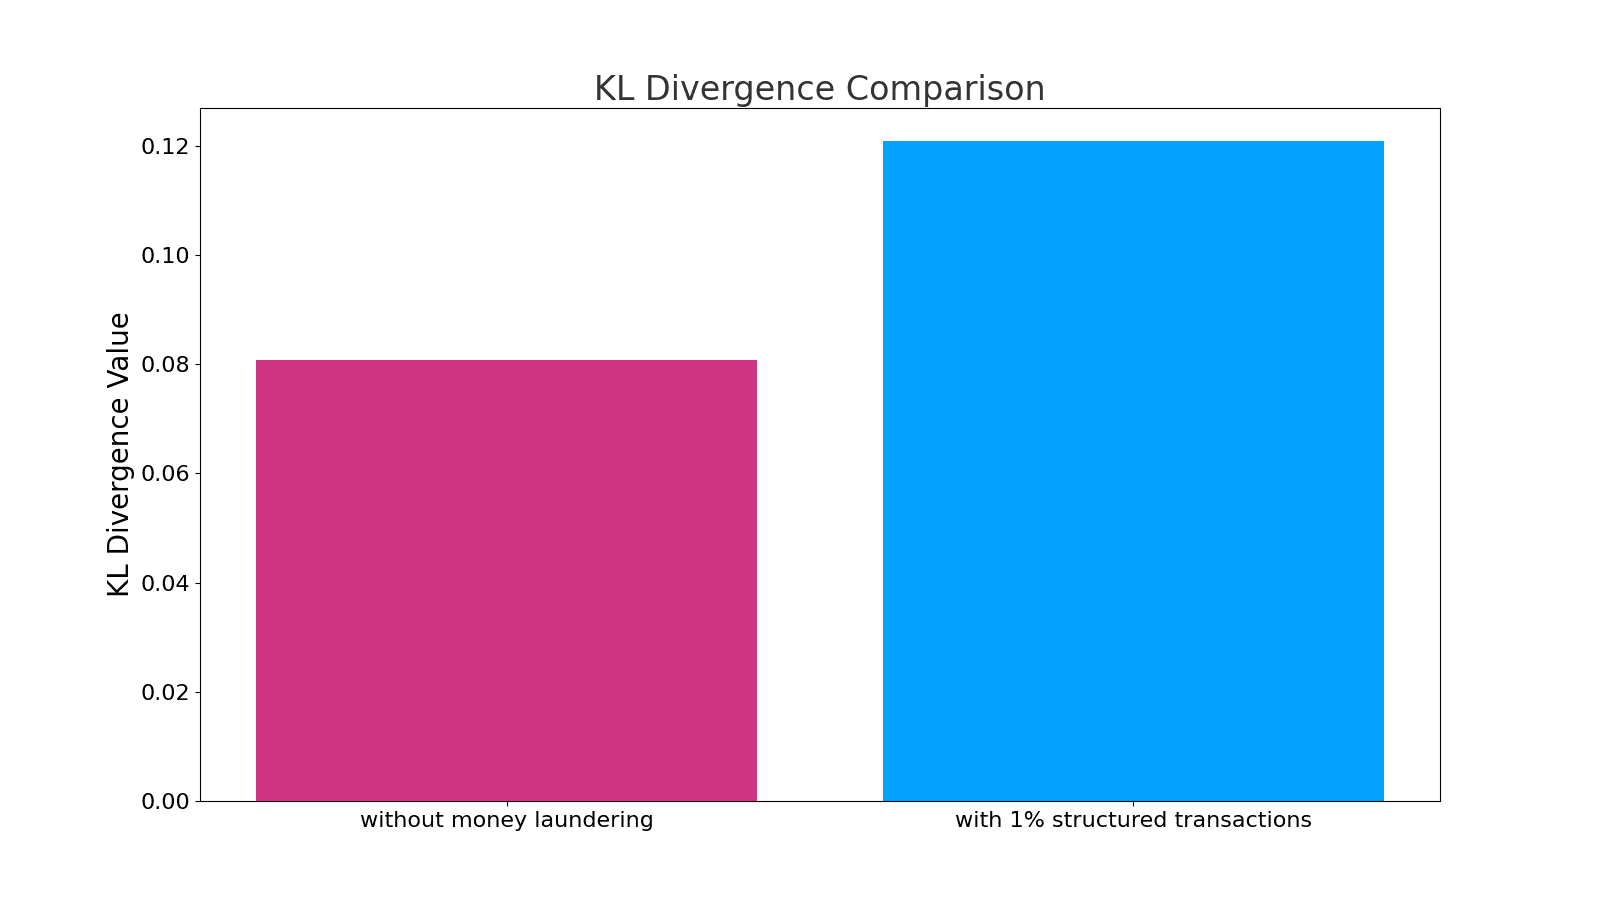 Kullback-Leibler (KL) Divergence for both scenarios.